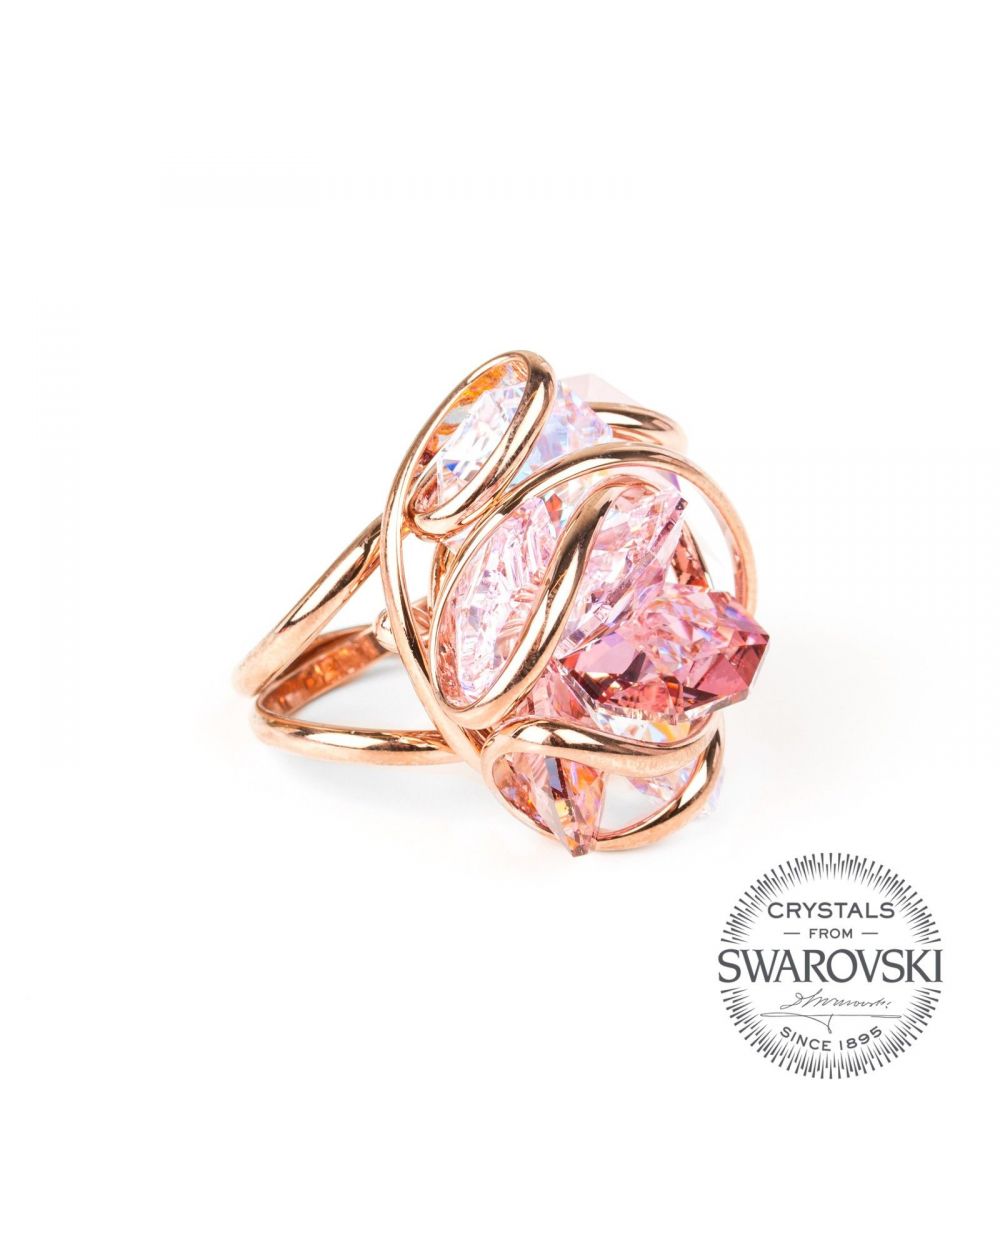 Andrea Marazzini bijoux - Bague cristal flower Swarovski rosé